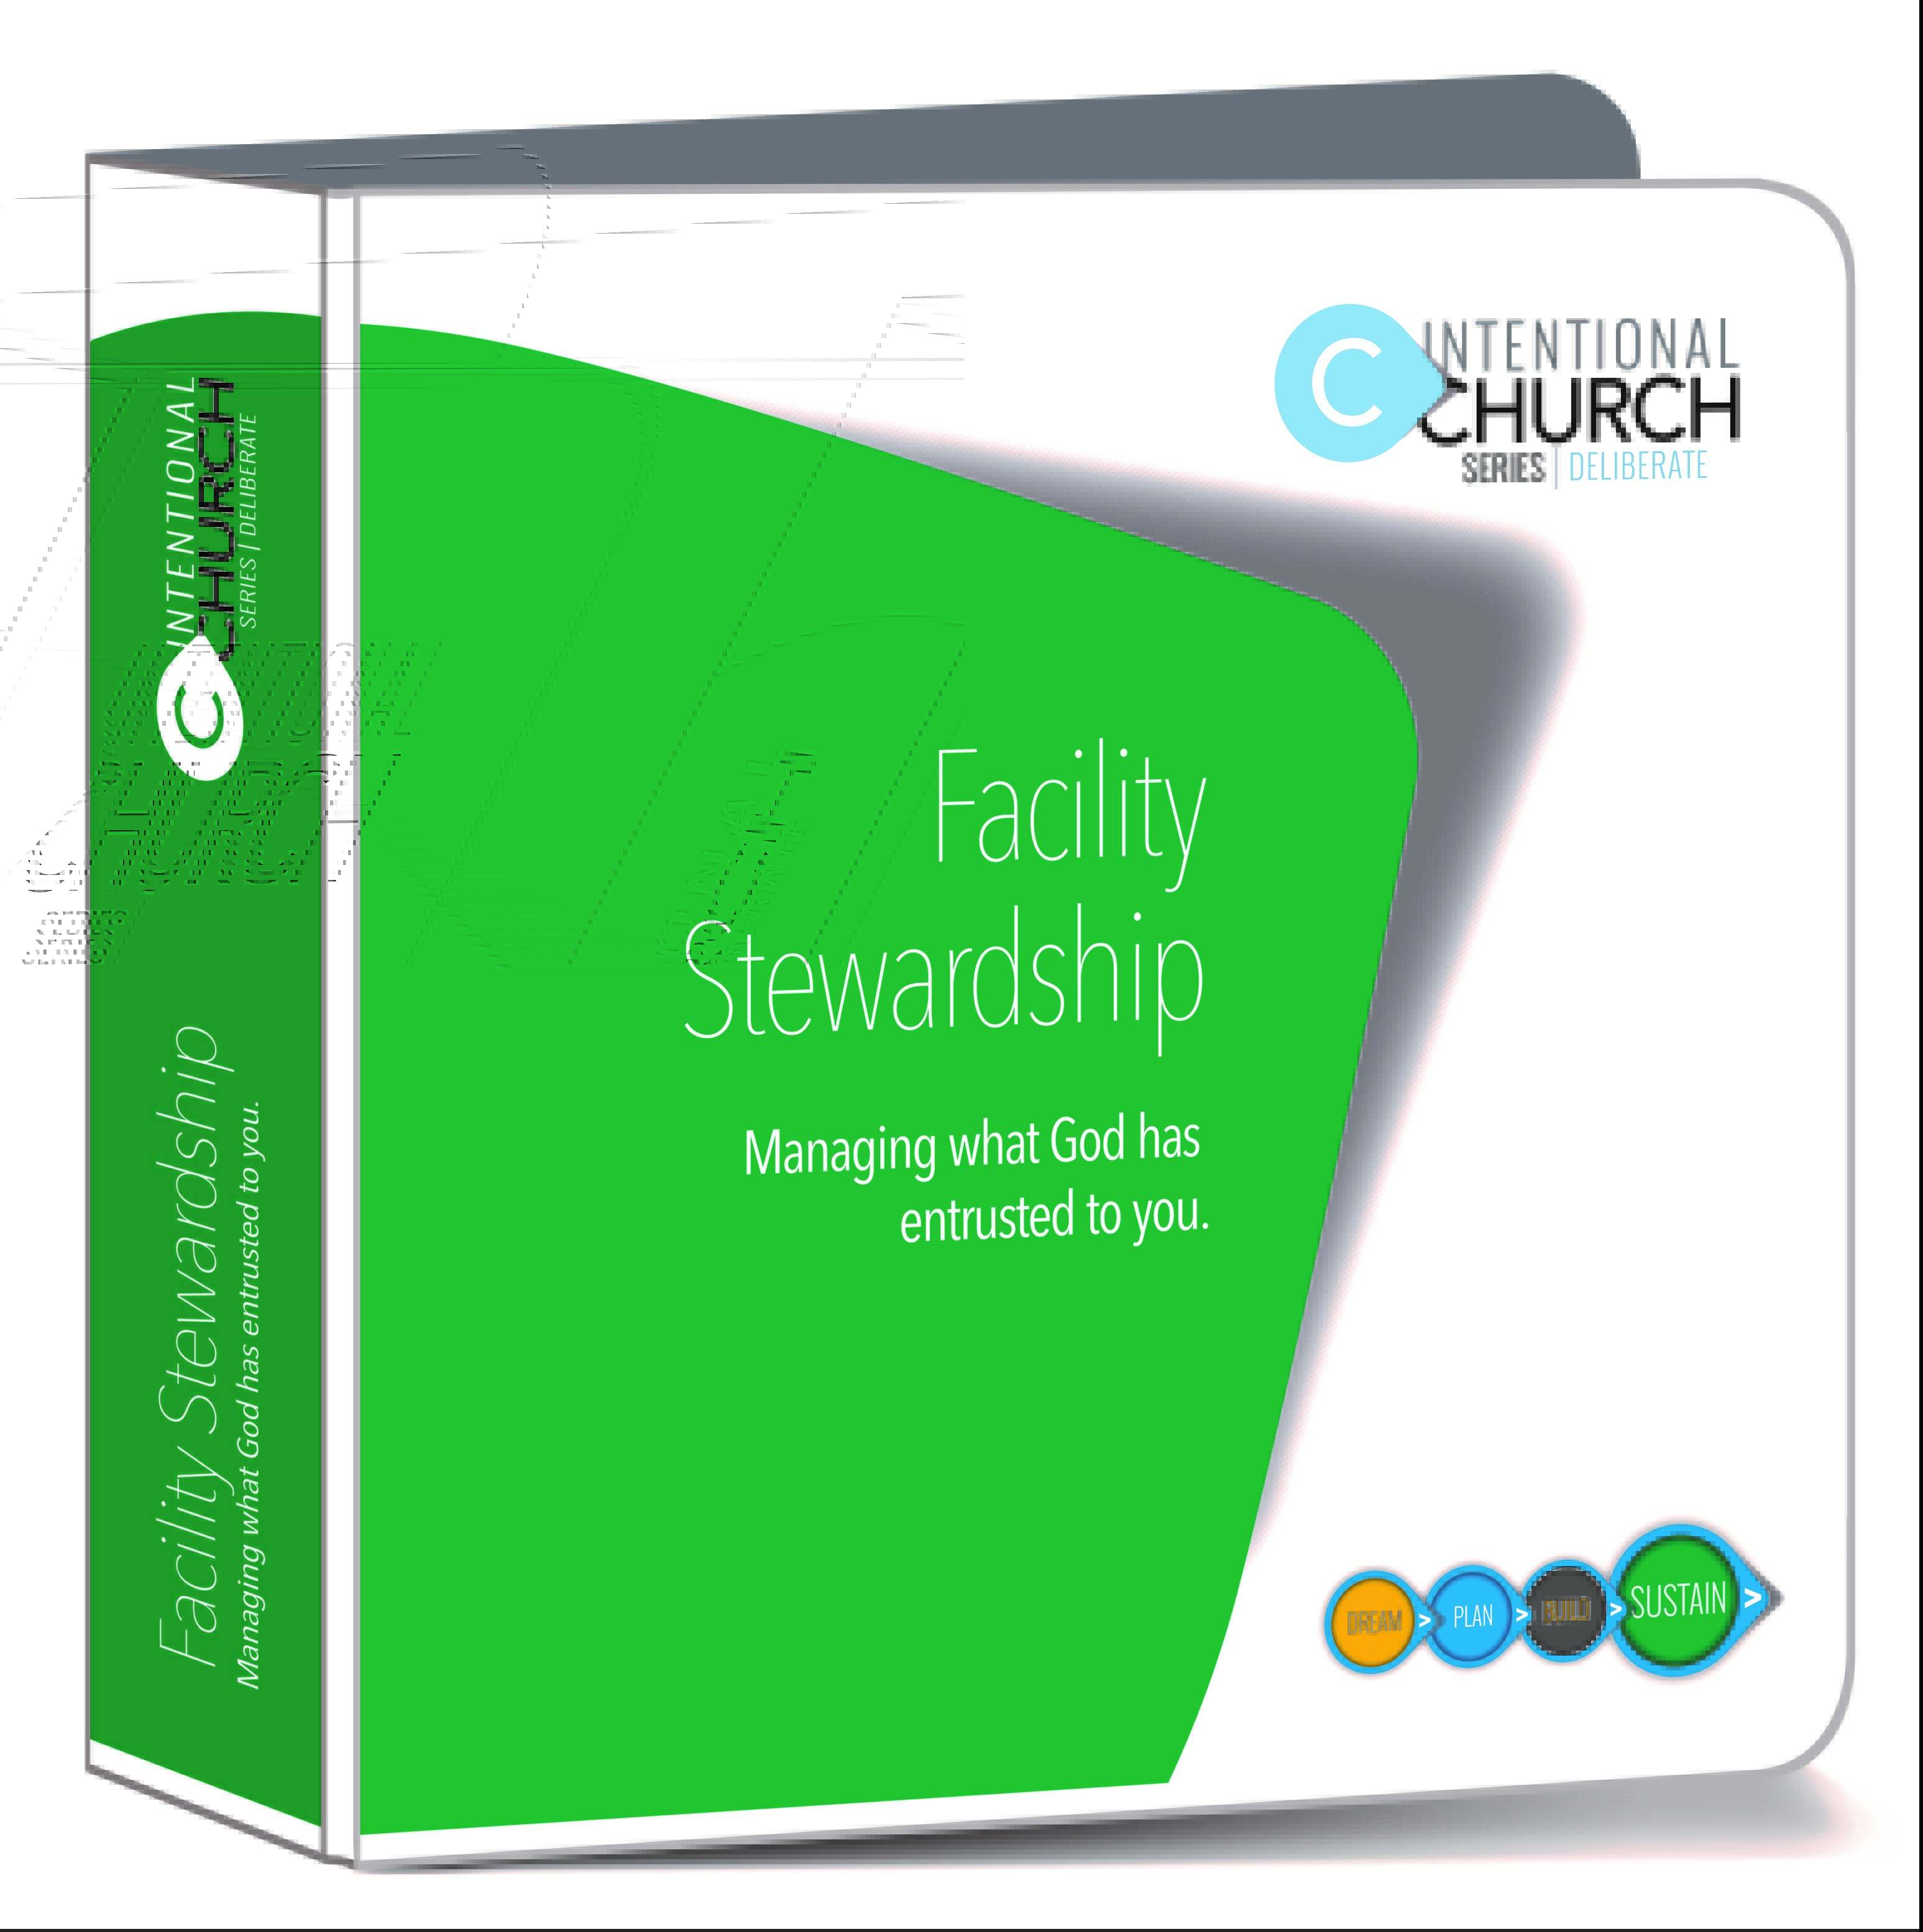 Facility Stewardship - Intentional Church Series Binder